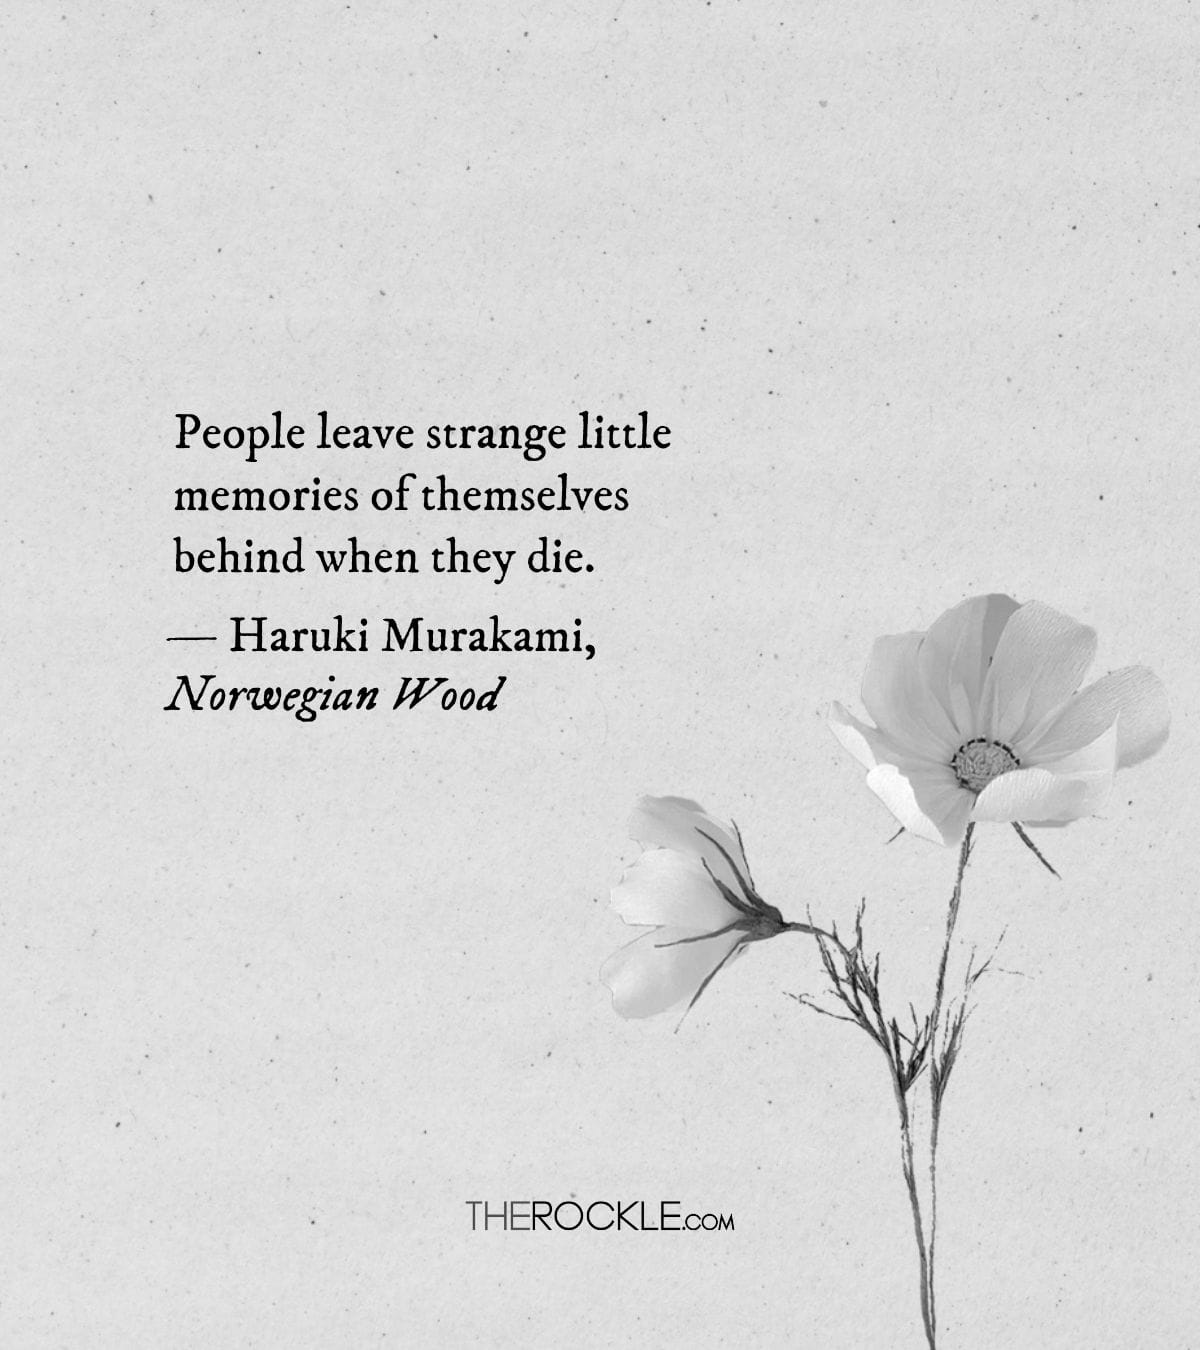 Haruki Murakami on posthumous memories